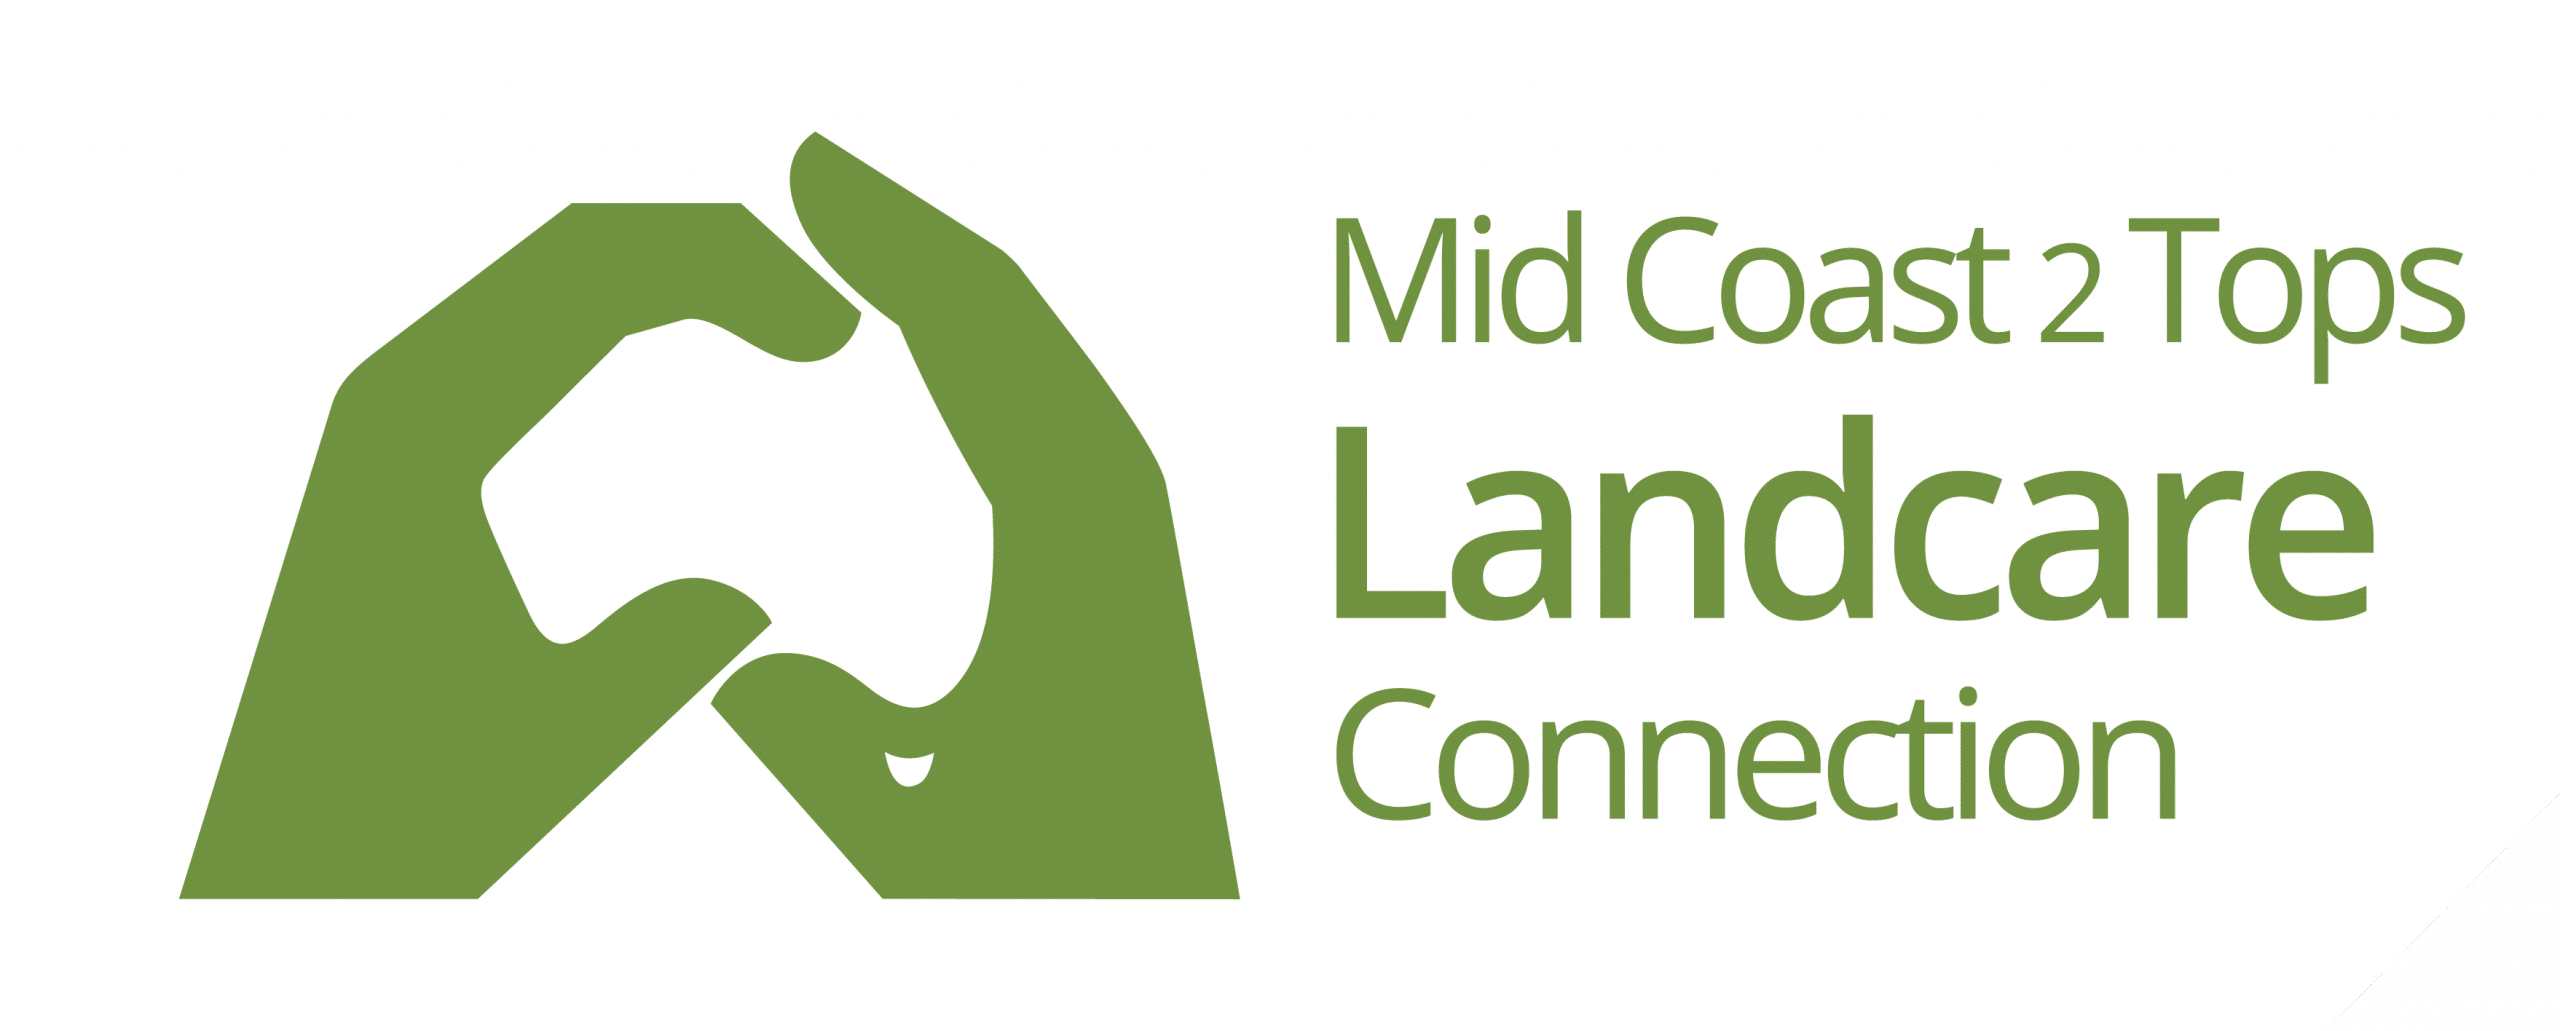 Mid Coast 2 Tops Landcare